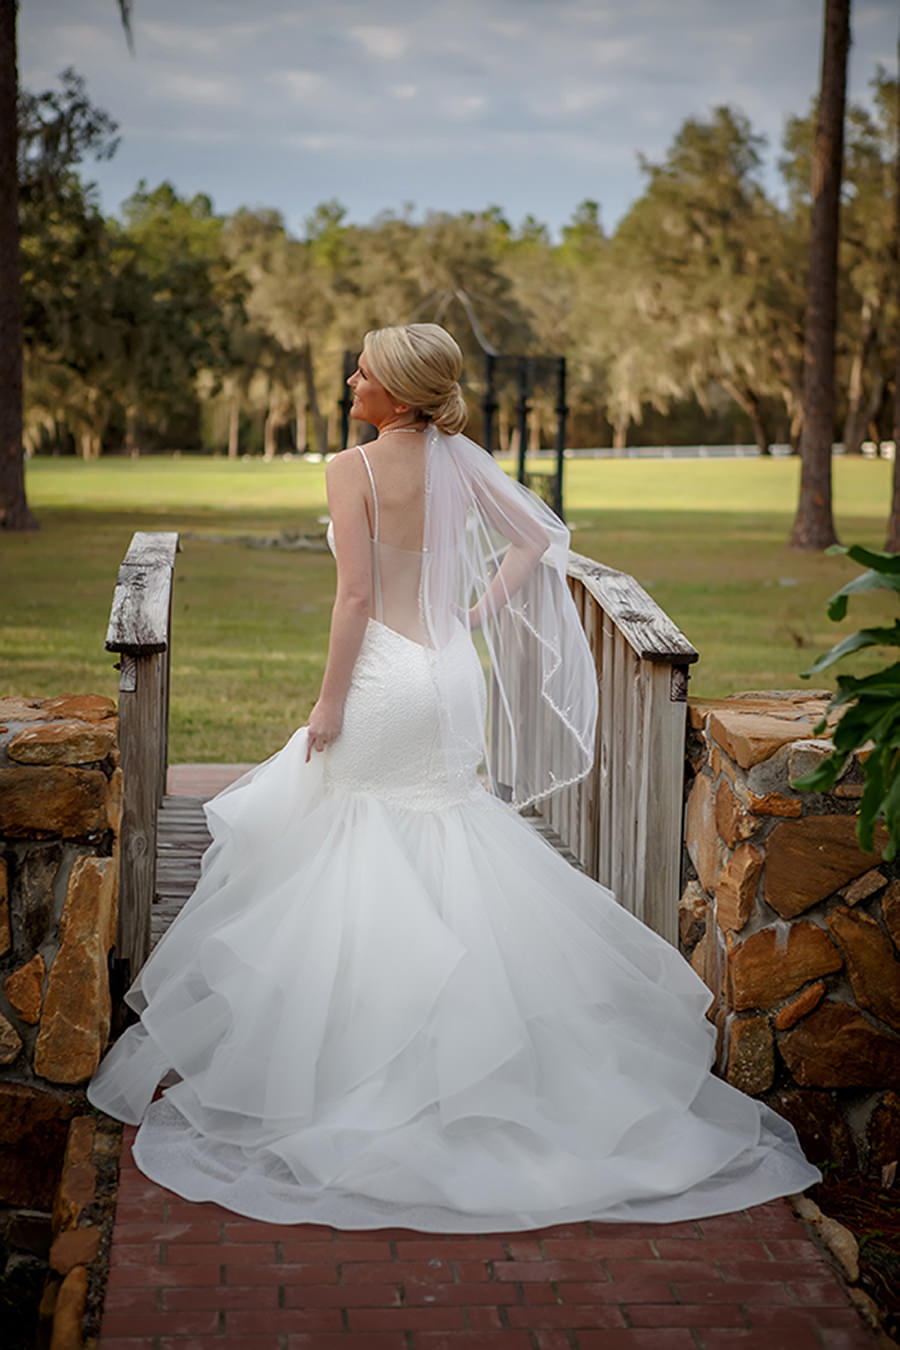 Outdoor Bridal Portrait wearing Mermaid Pnina Tornai Wedding Dress and Beaded Veil | Tampa Bay Wedding Venue The Lange Farm | Photographer Brian C Idocks Photographics